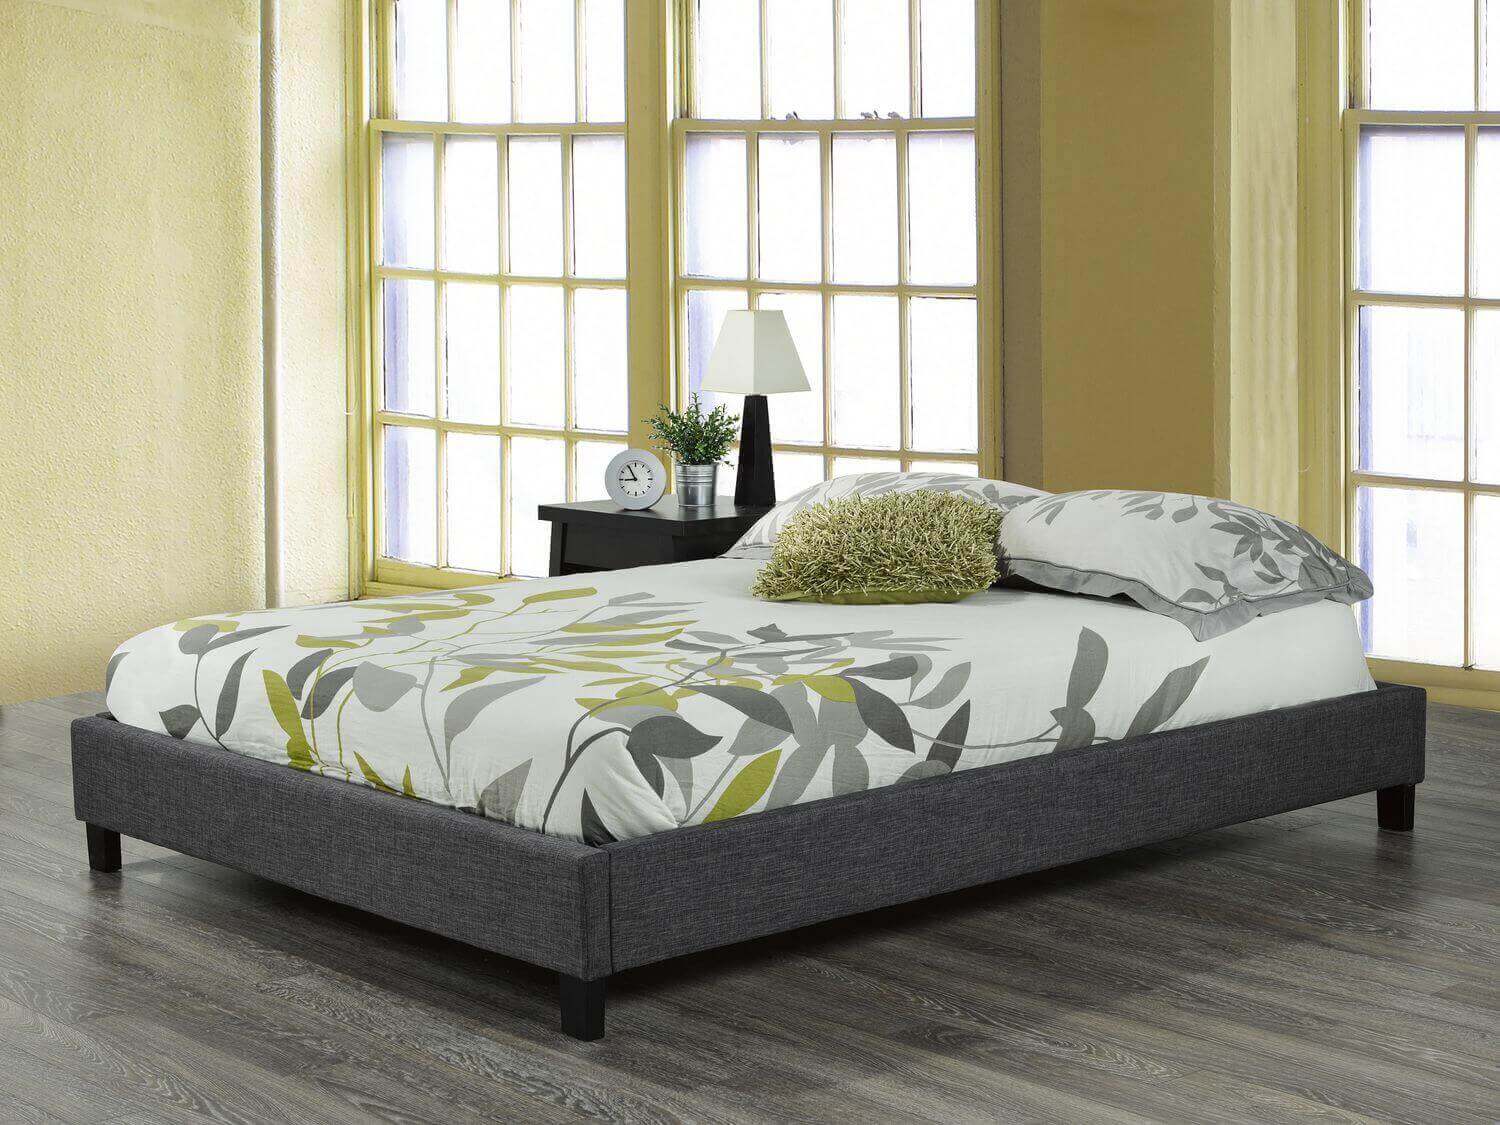 bed base and mattress